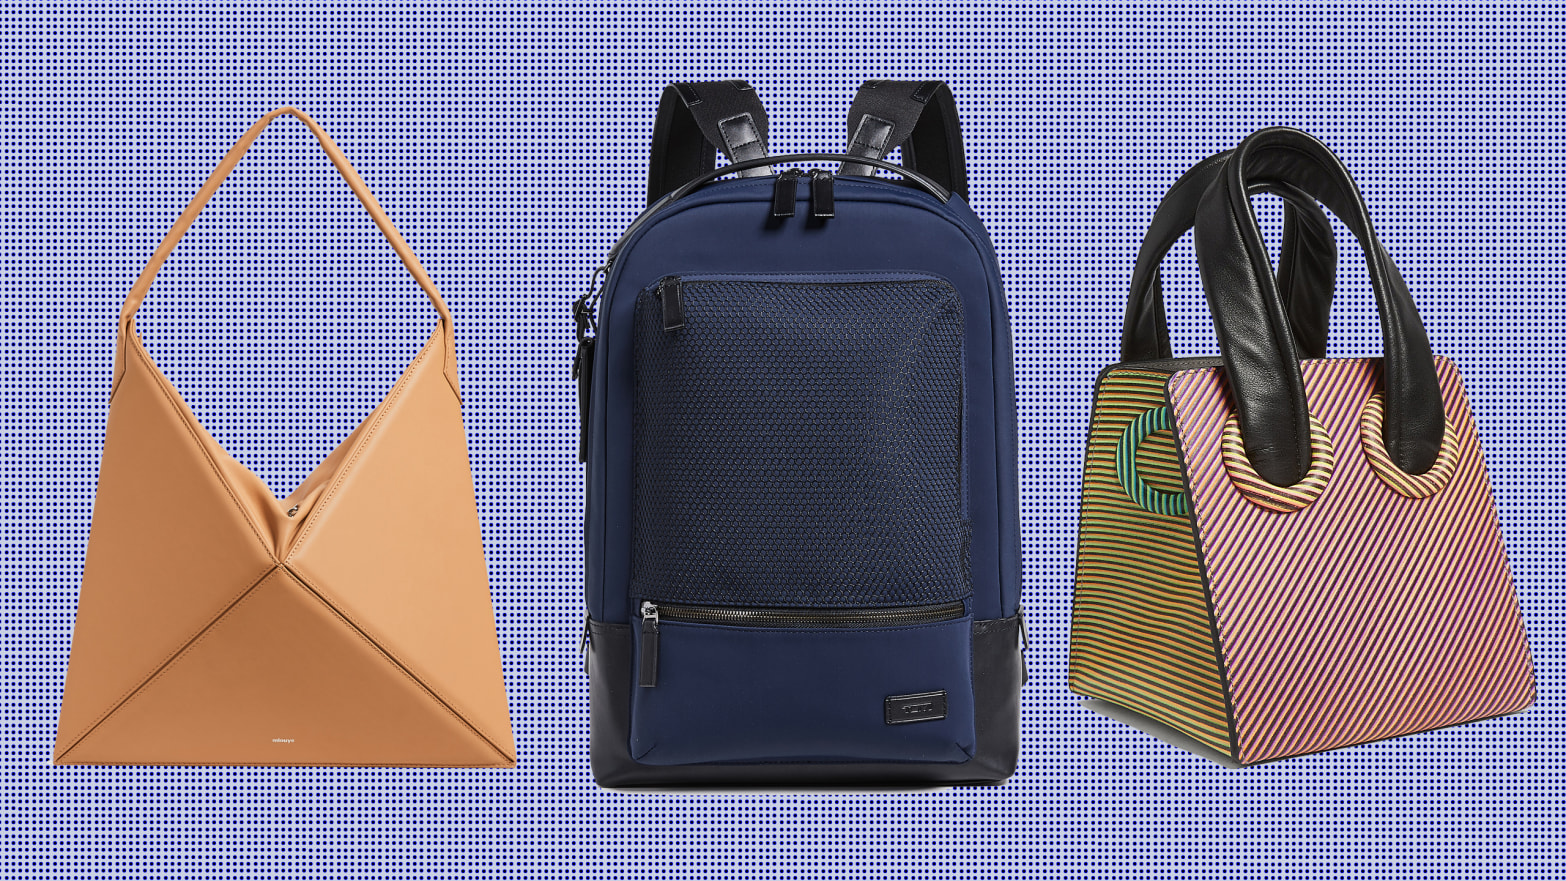 imobaby Holiday Golden Mask Changing Bags Large Capacity Handbags Canvas Shoulder Bag Backpack